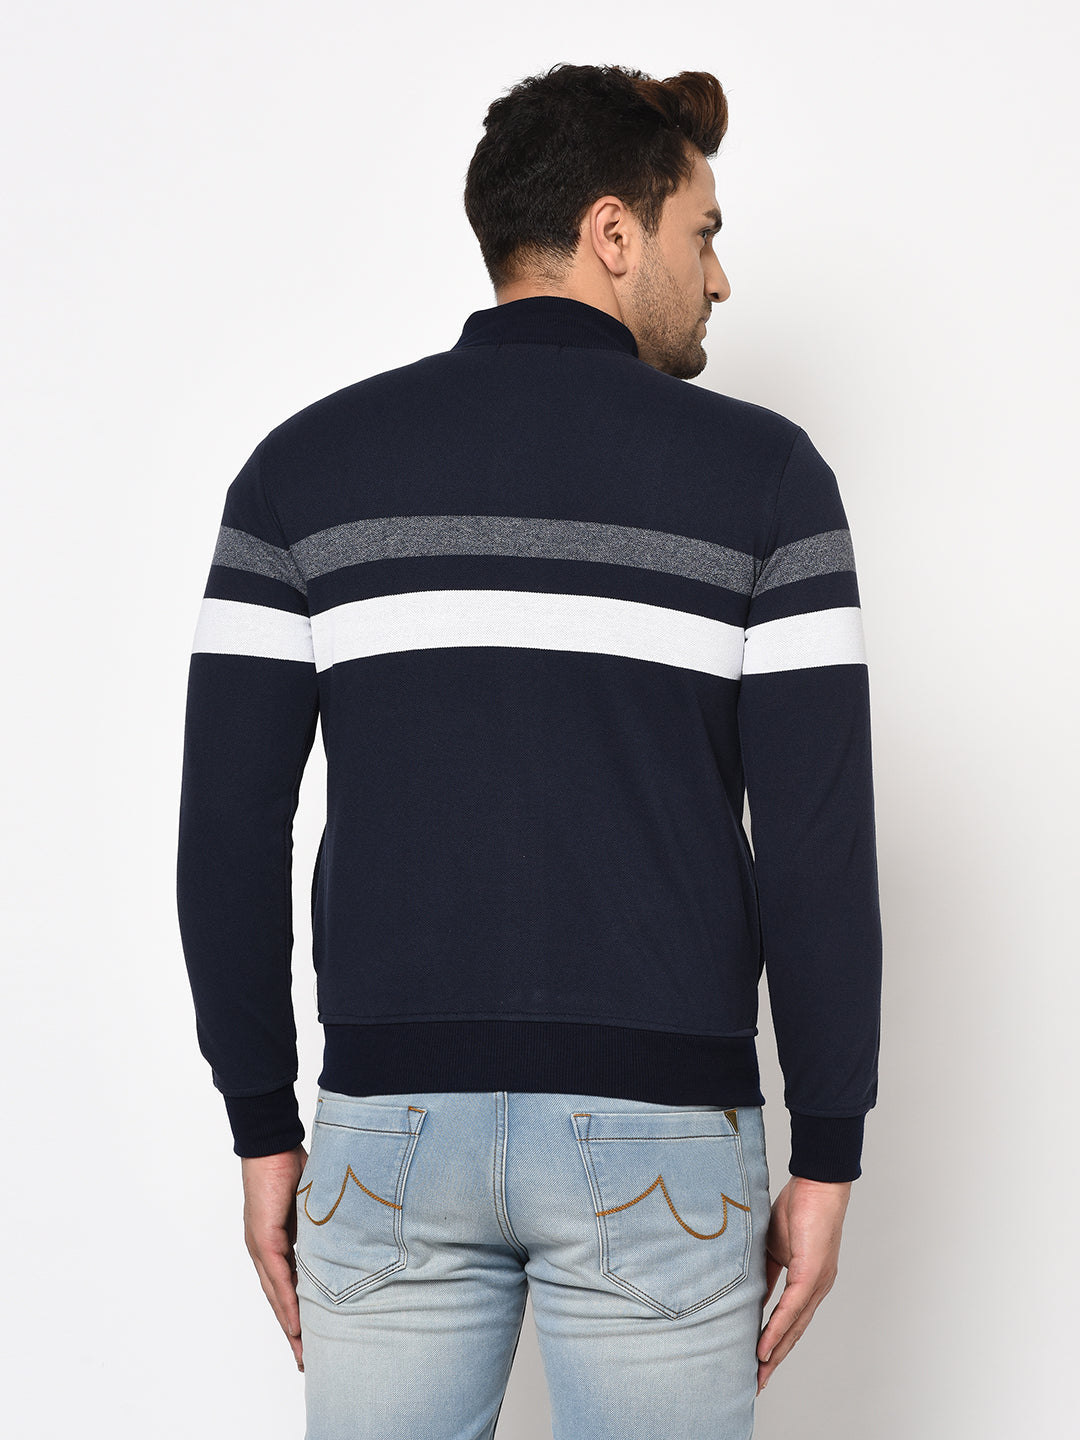 Austin wood Mens Navy Blue Long Sleeves High Neck Striped Sweatshirt